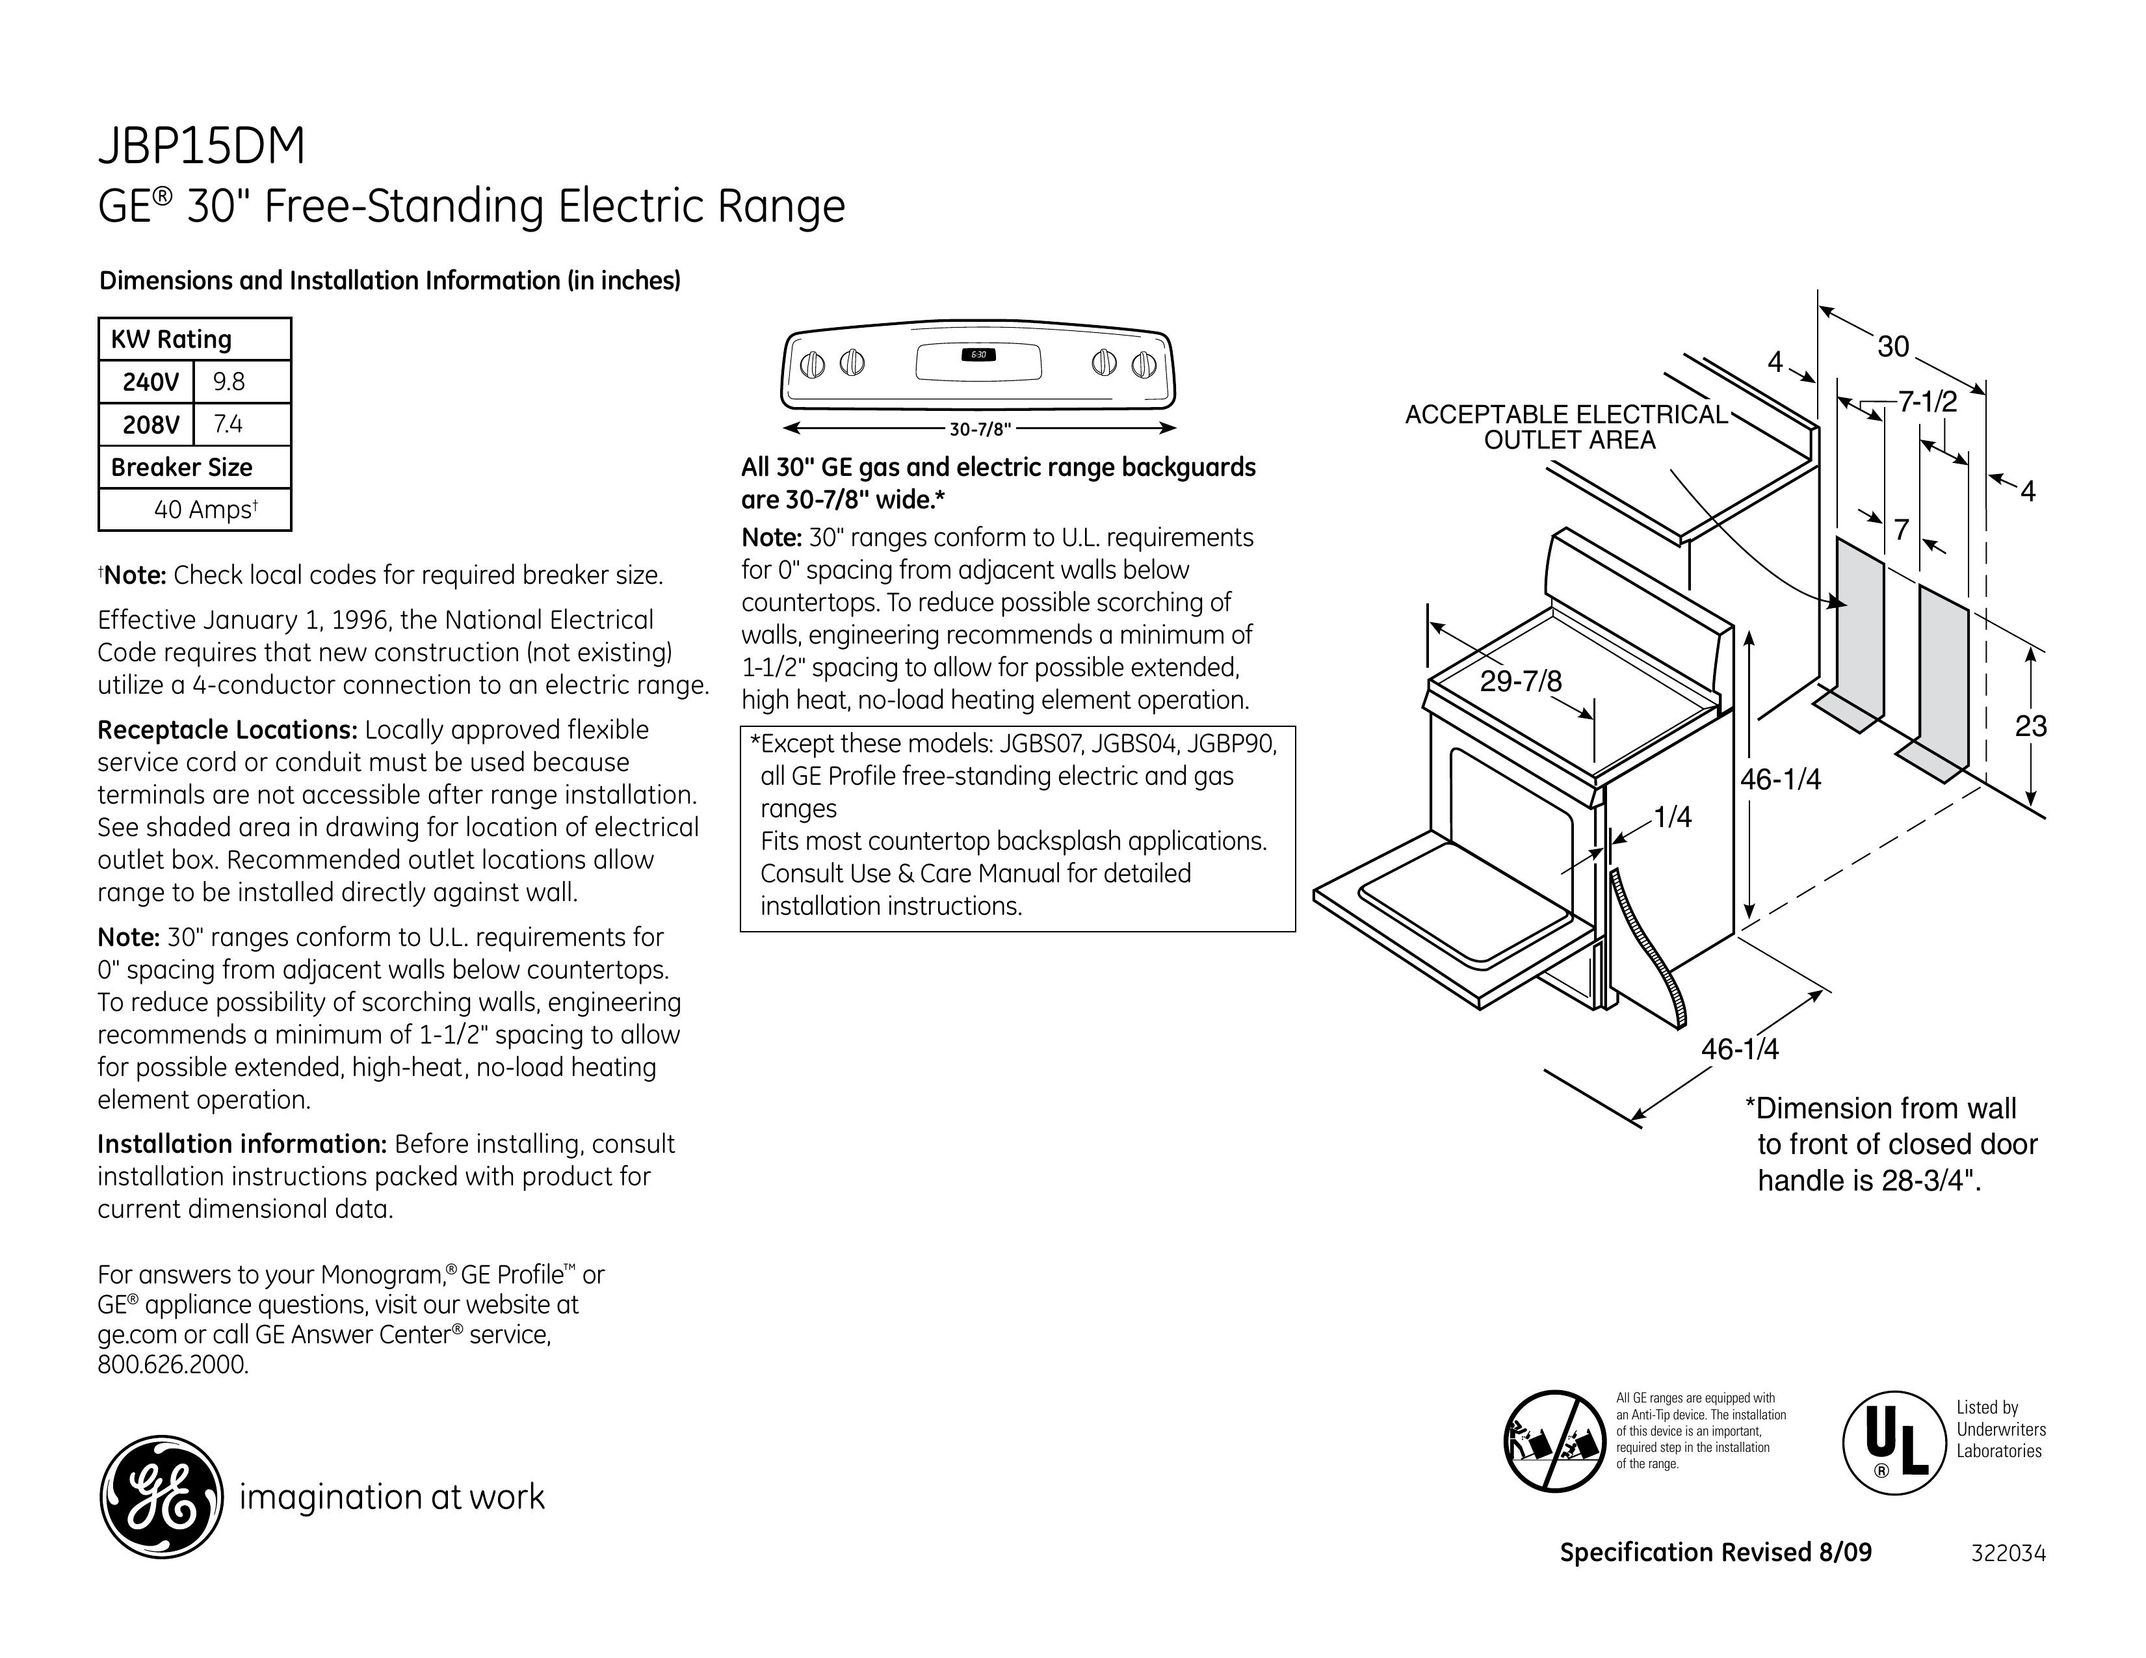 GE JBP15DM Water Heater User Manual